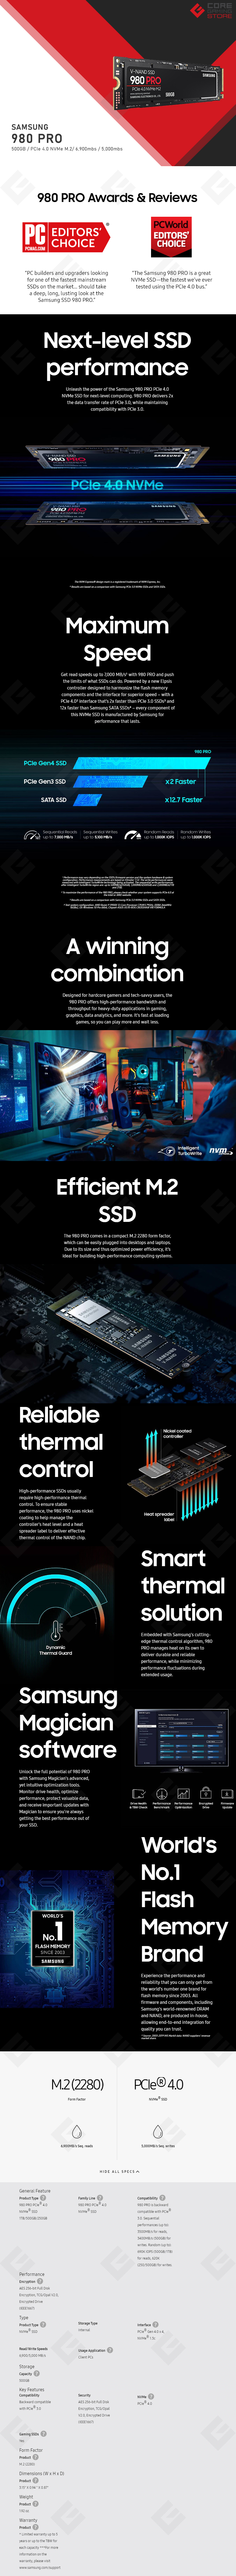 Unidad de Estado Solido SSD NVMe M.2 Samsung 980 Pro, 500GB, 6,900/5,000 MB/s, PCI Express 4.0 - MZ-V8P500